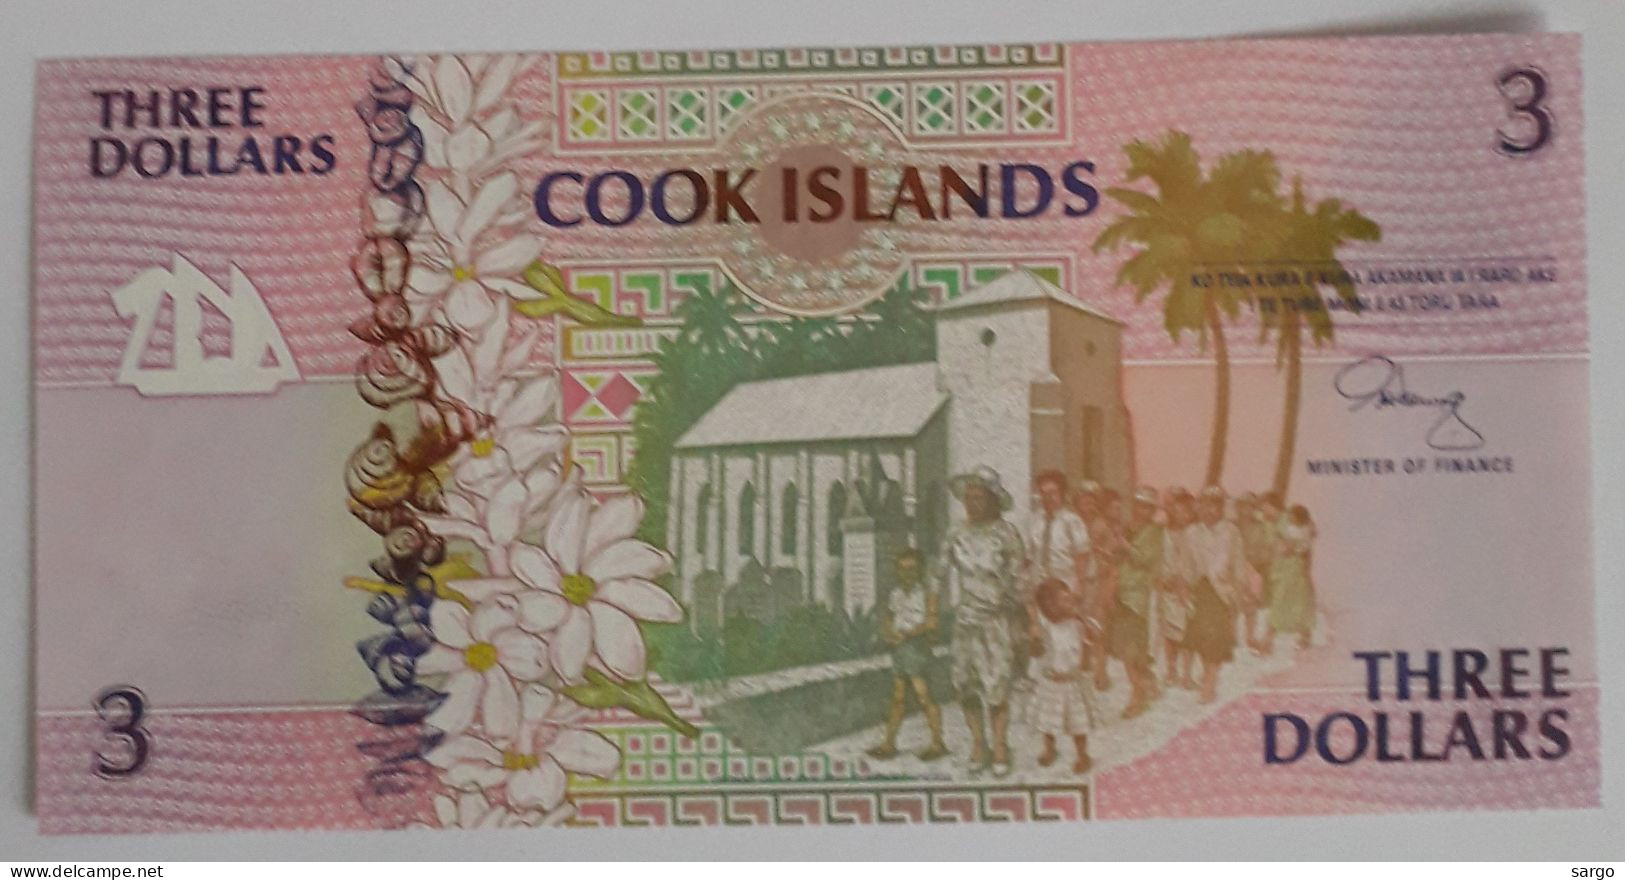 COOK ISLANDS - AITUTAKI - 3 DOLLARS - 1992 - UNC - P 7  - BANKNOTES - PAPER MONEY - CARTAMONETA - - Cook Islands